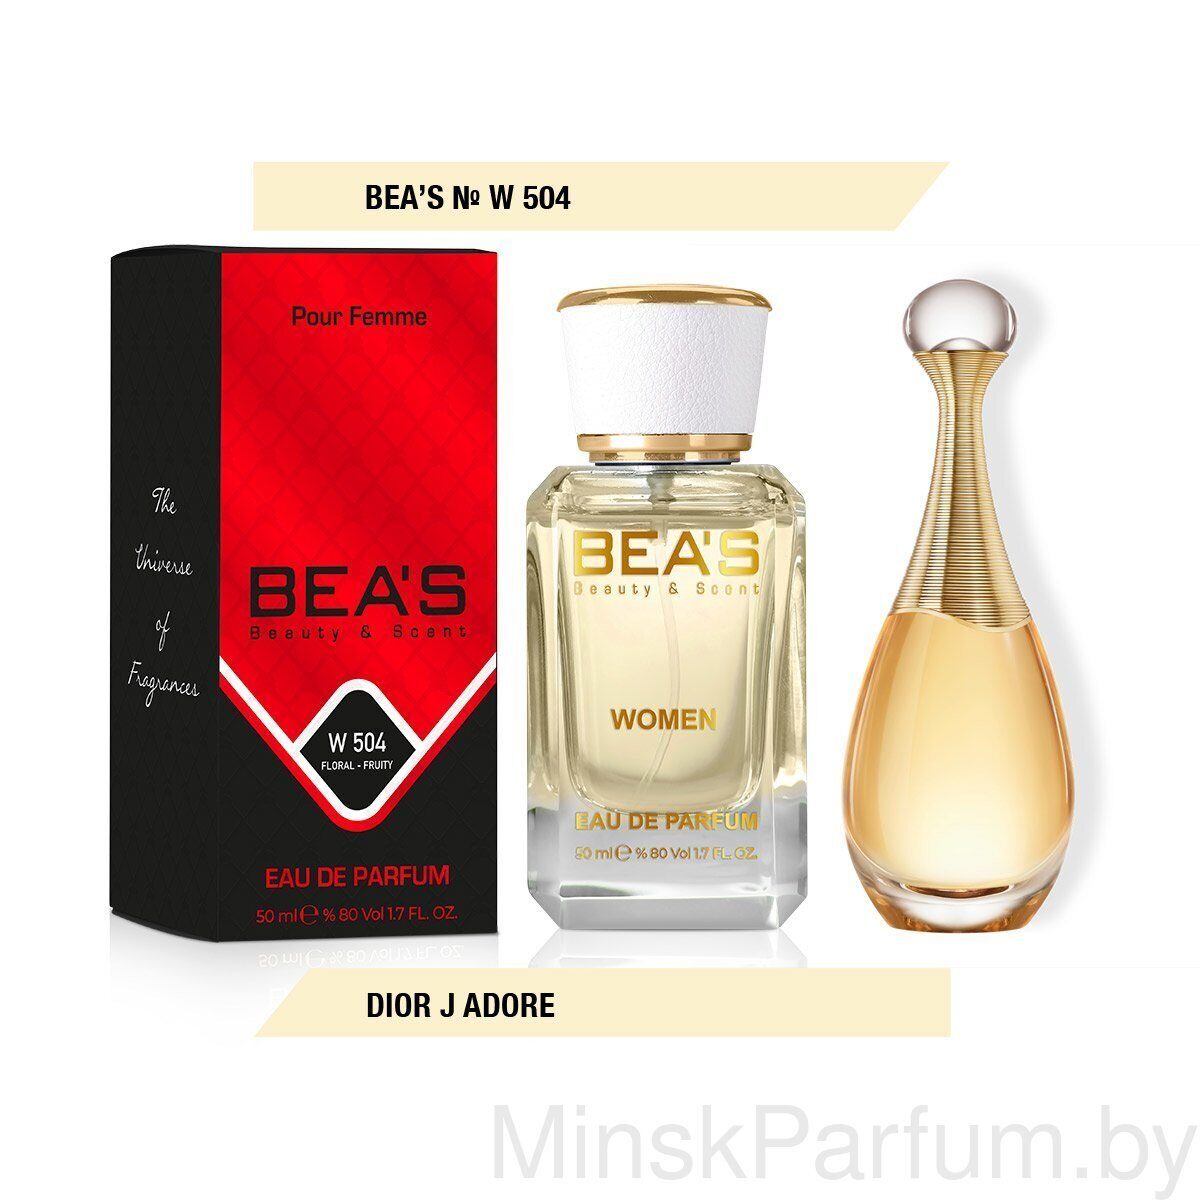 Beas W504 Christian Dior J'adore Women edp 50 ml